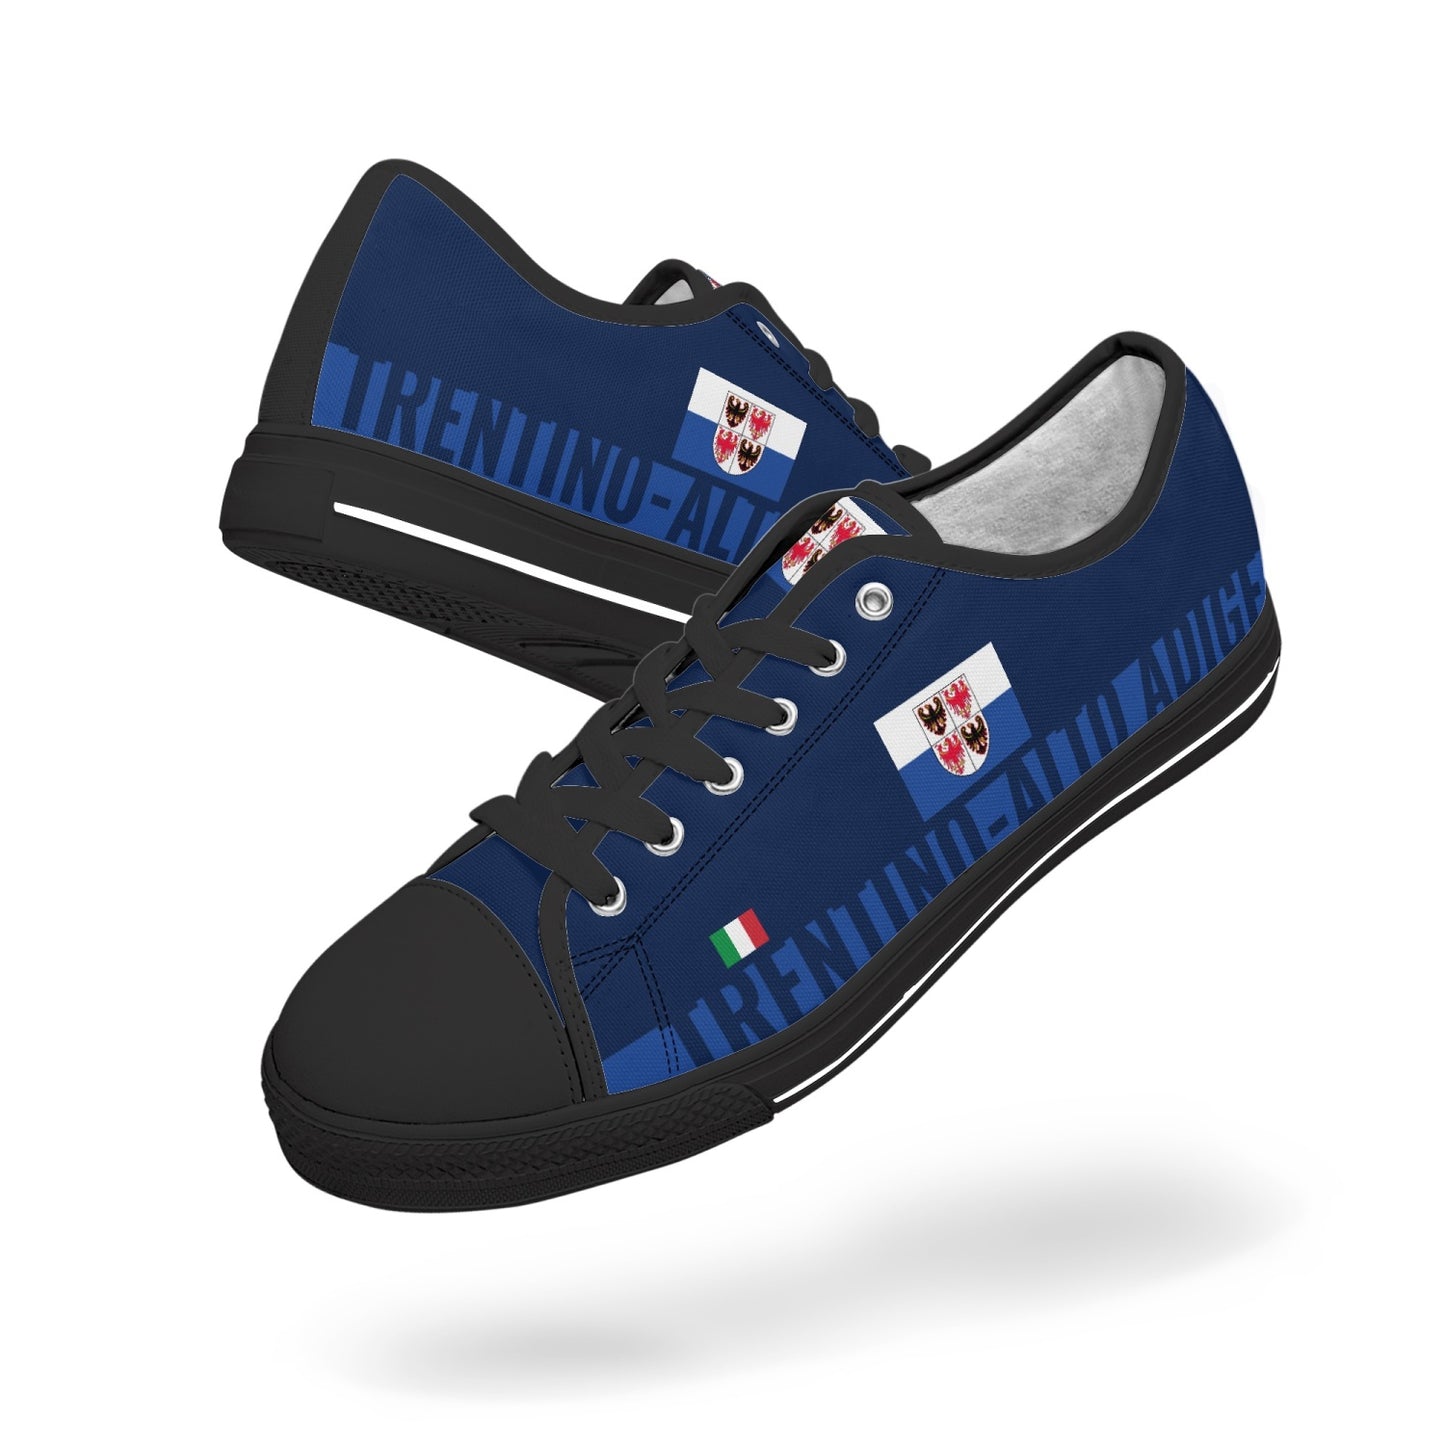 Trentino-Alto Adige Shoes Low-top V2